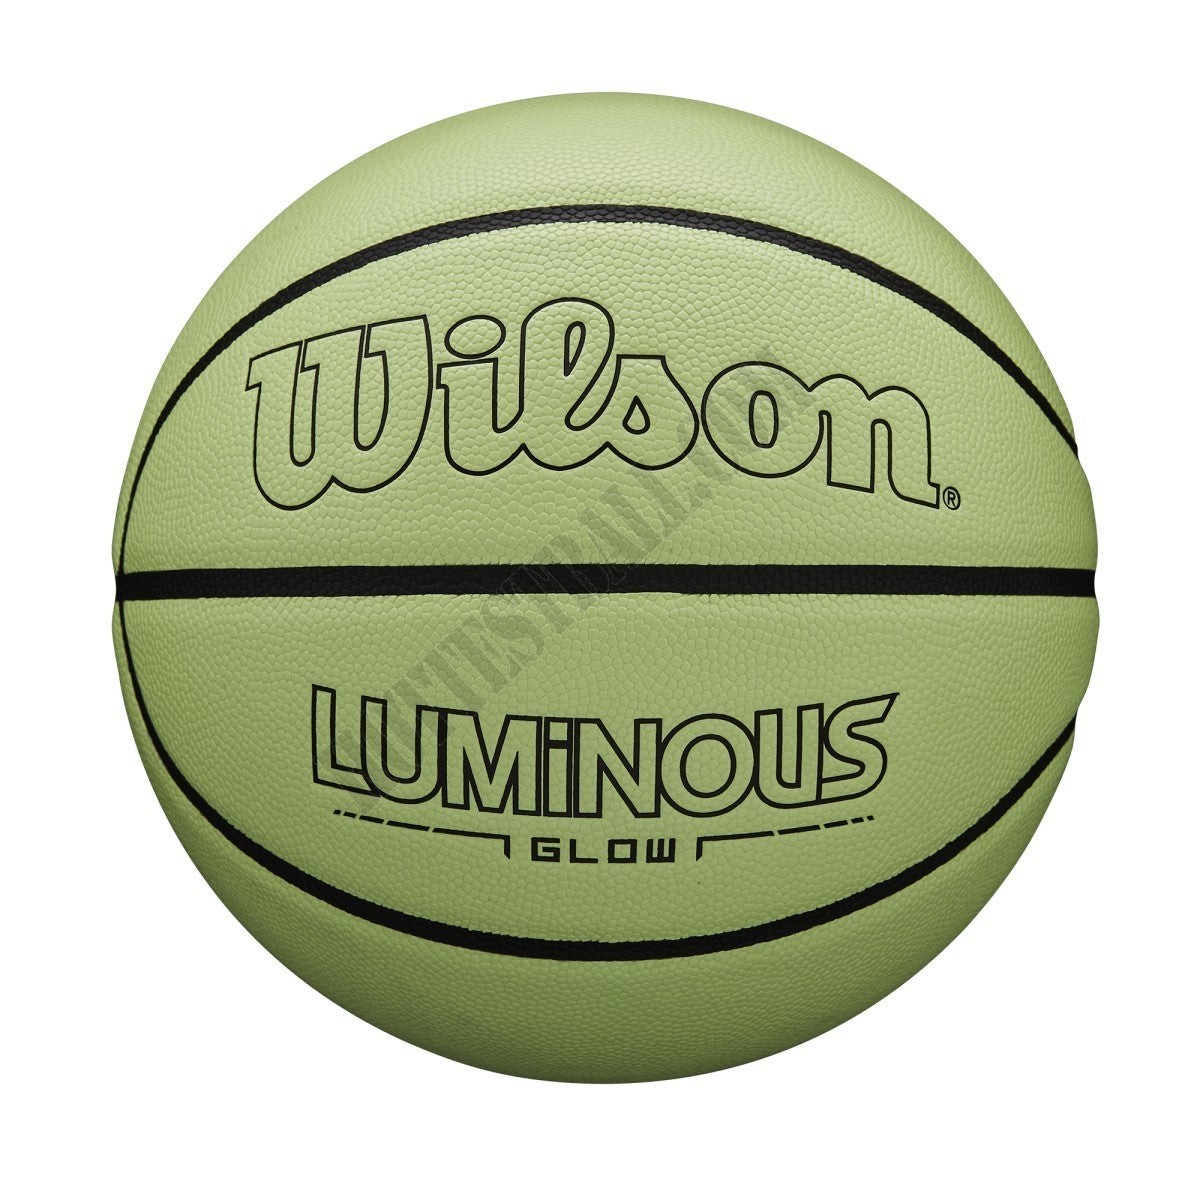 Luminous Glow Basketball - Wilson Discount Store - Luminous Glow Basketball - Wilson Discount Store